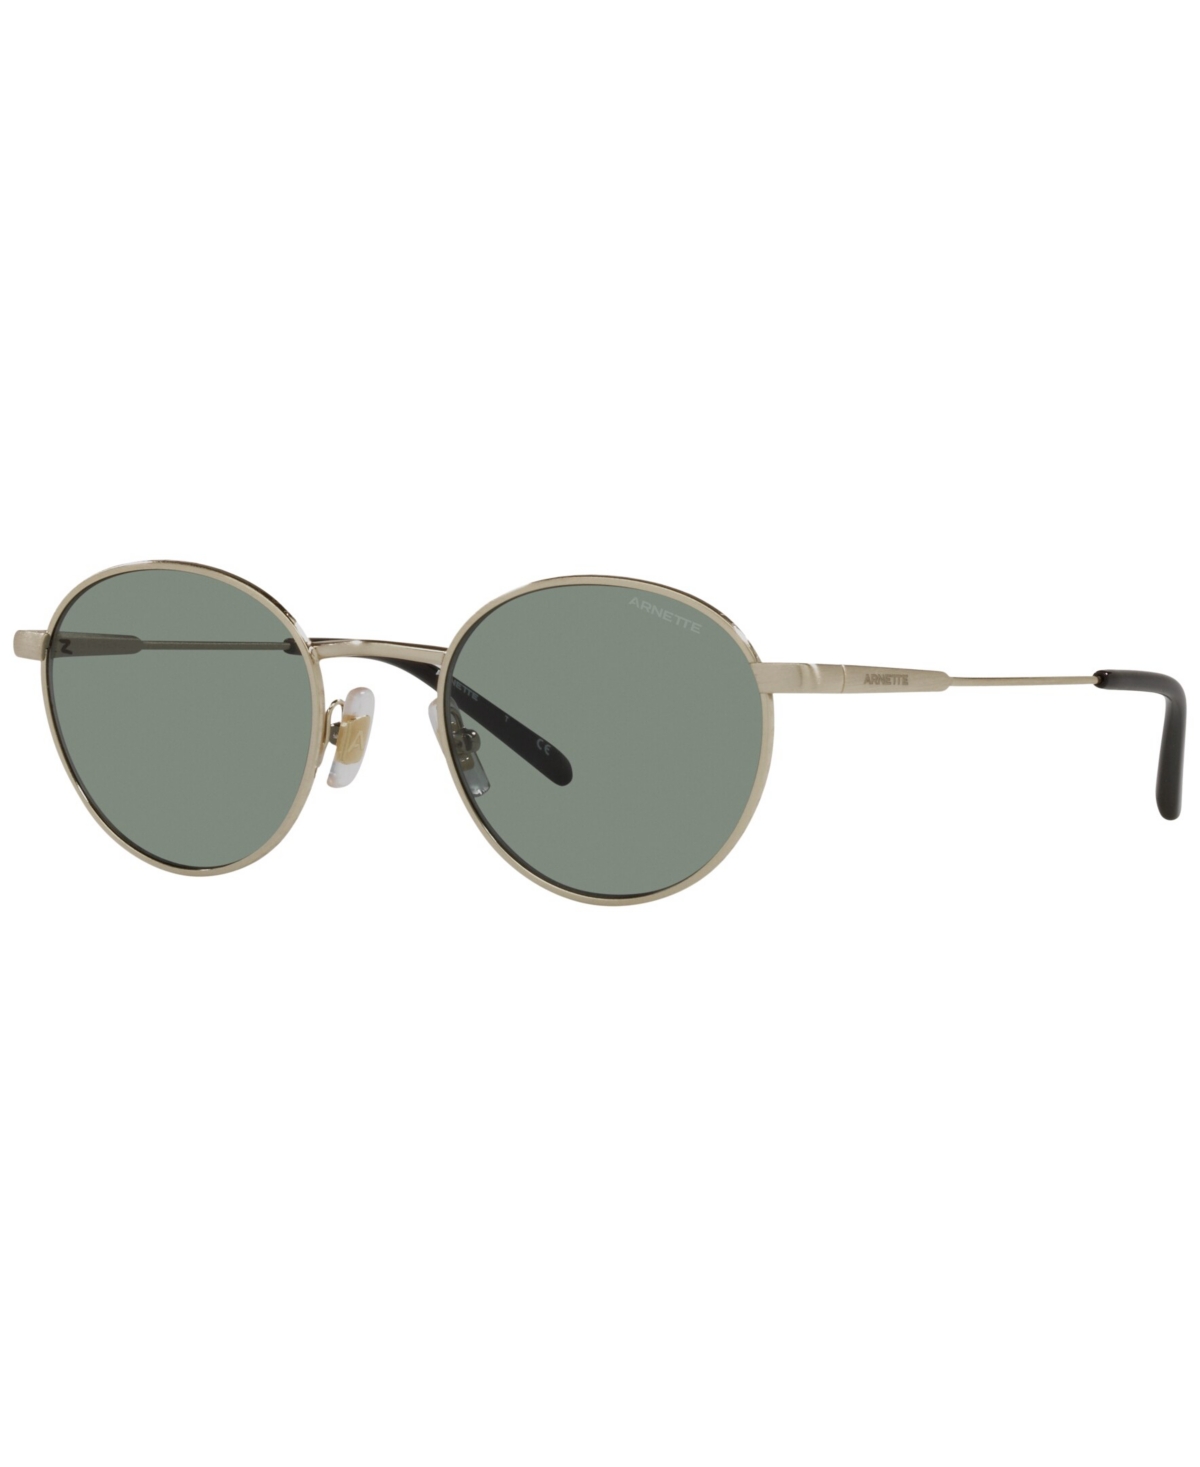 Arnette Unisex Sunglasses, AN3084 The Professional 49